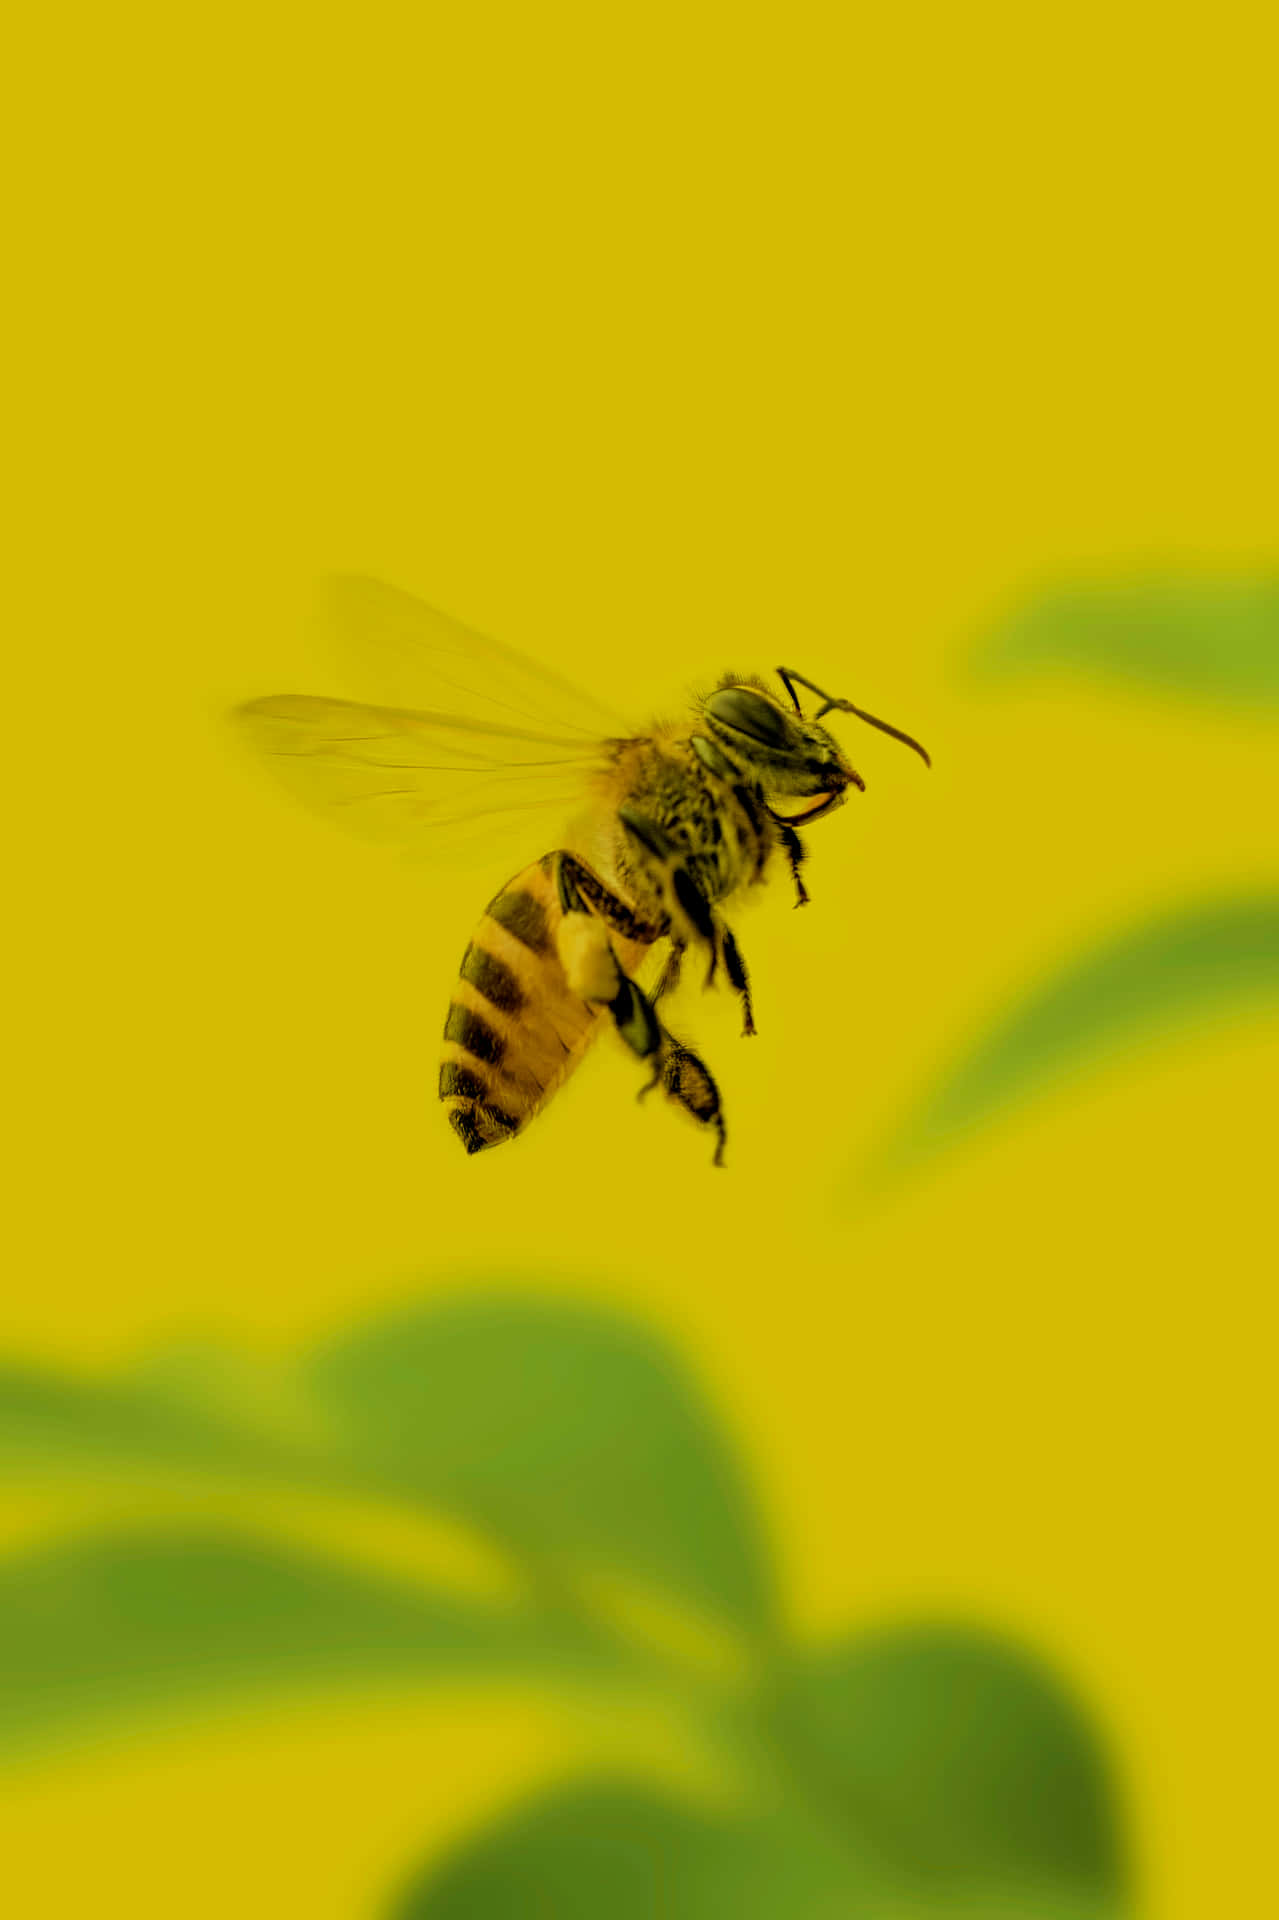 Bumblebeein Flight Yellow Backdrop Wallpaper